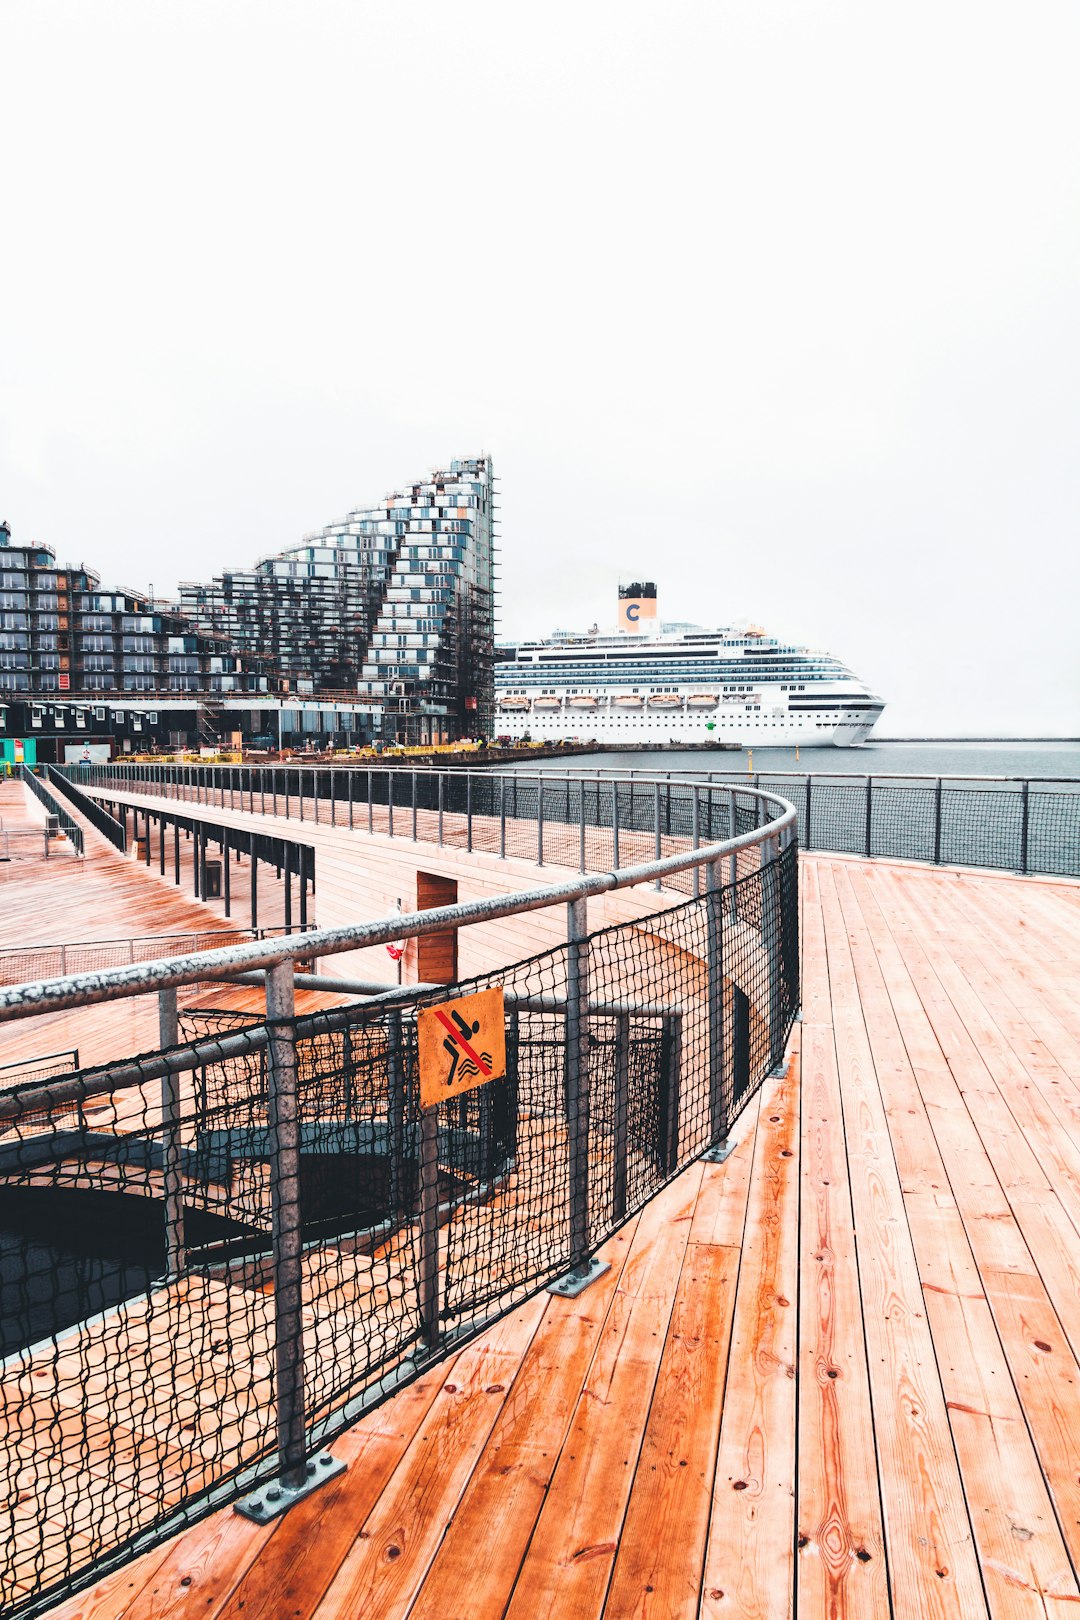 travelers stories about Pier in Havnebadet, Denmark